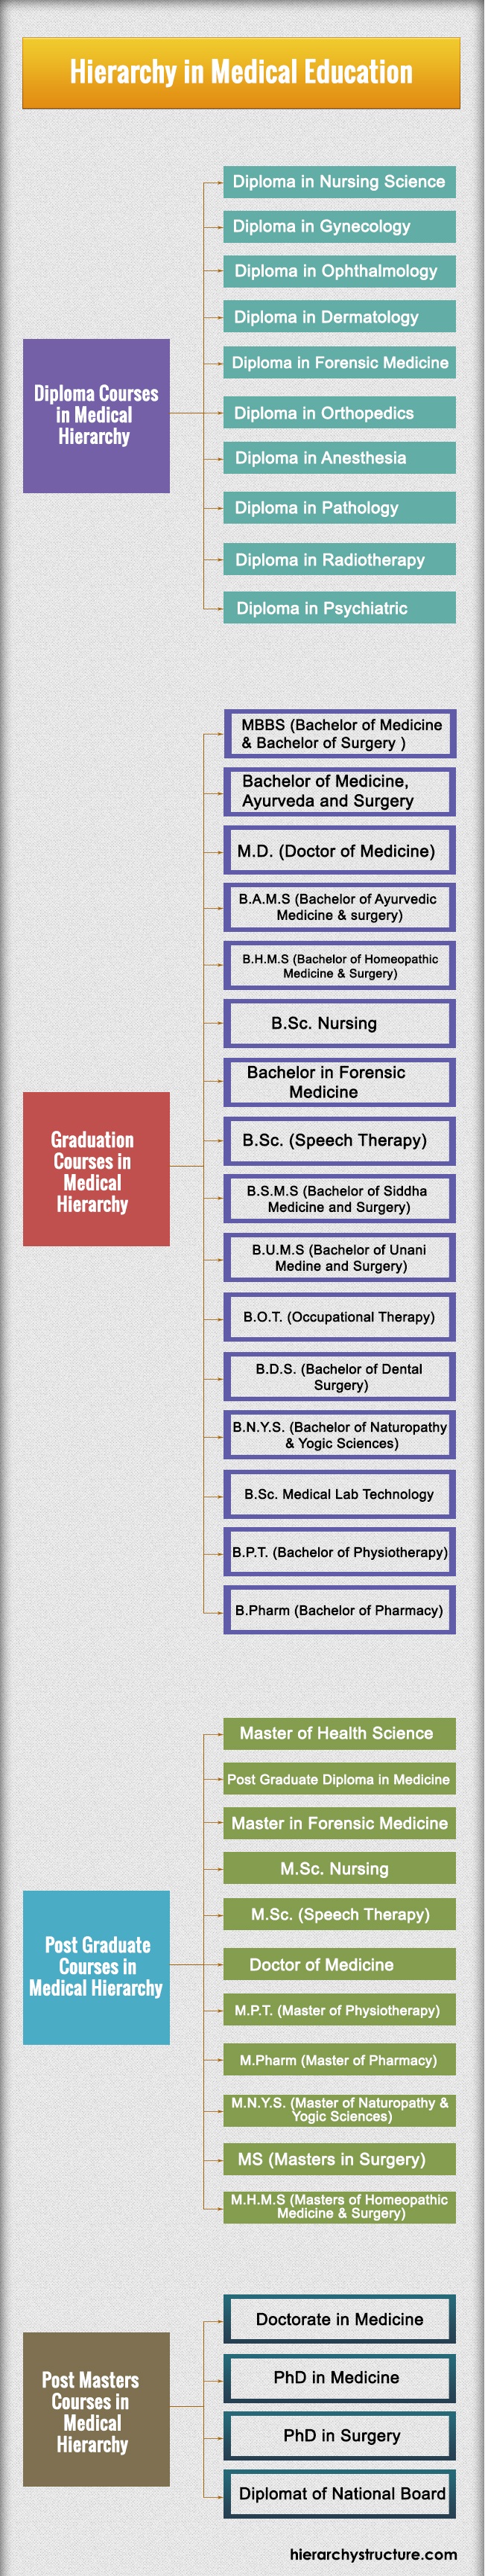 Hierarchy in Medical Education